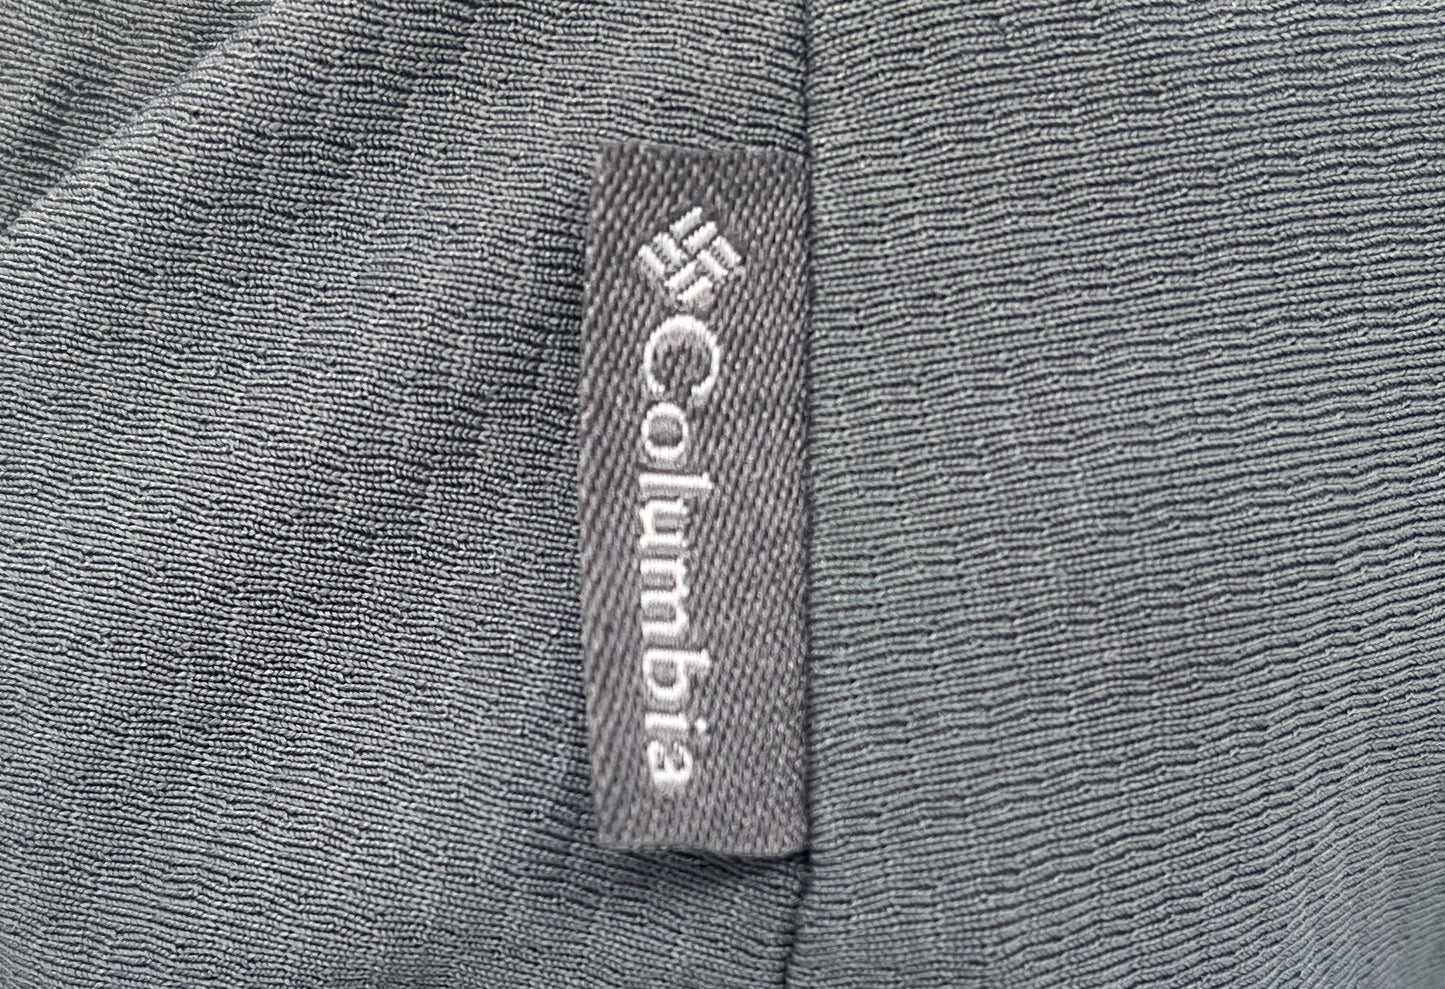 Columbia Hat Neck/ Safari Cap Olive, Grey SKU 000427